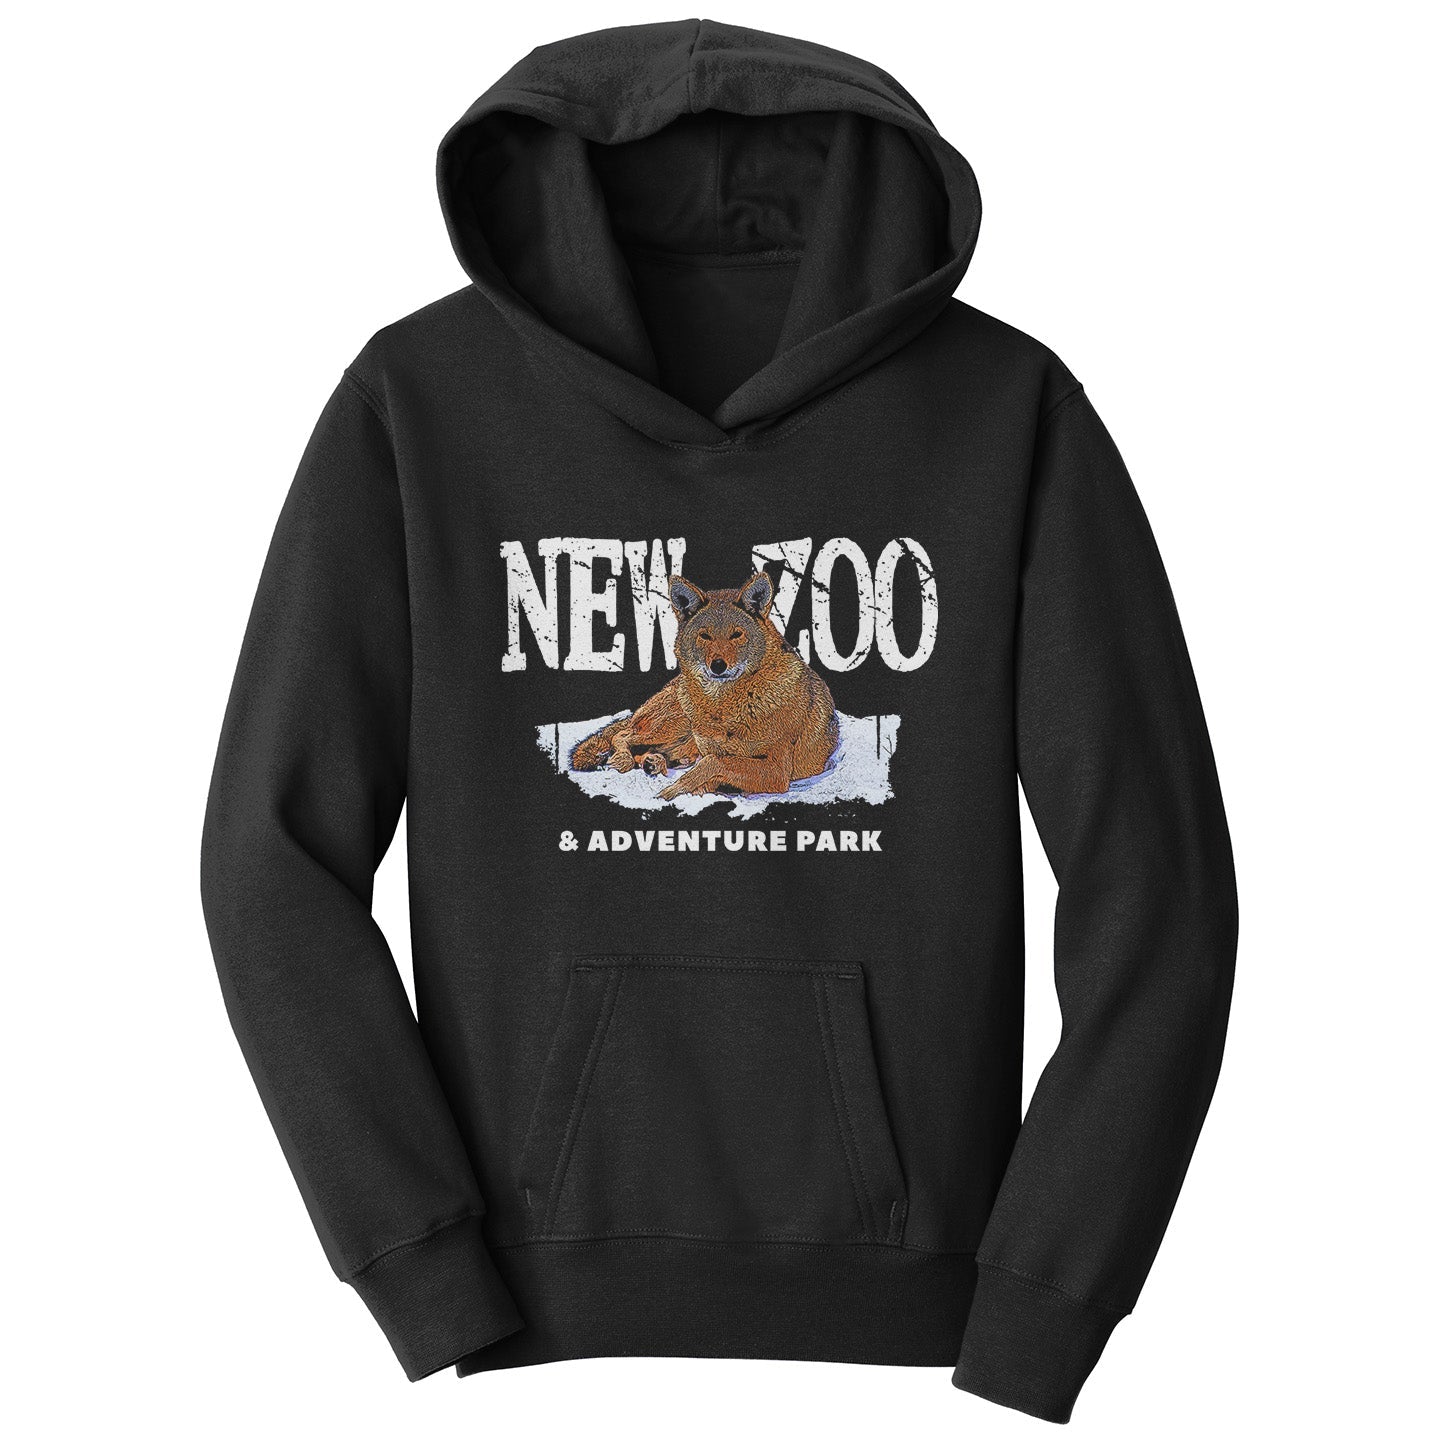 NEW Zoo & Adventure Park - NEW Zoo Red Wolf Art - Kids' Unisex Hoodie Sweatshirt